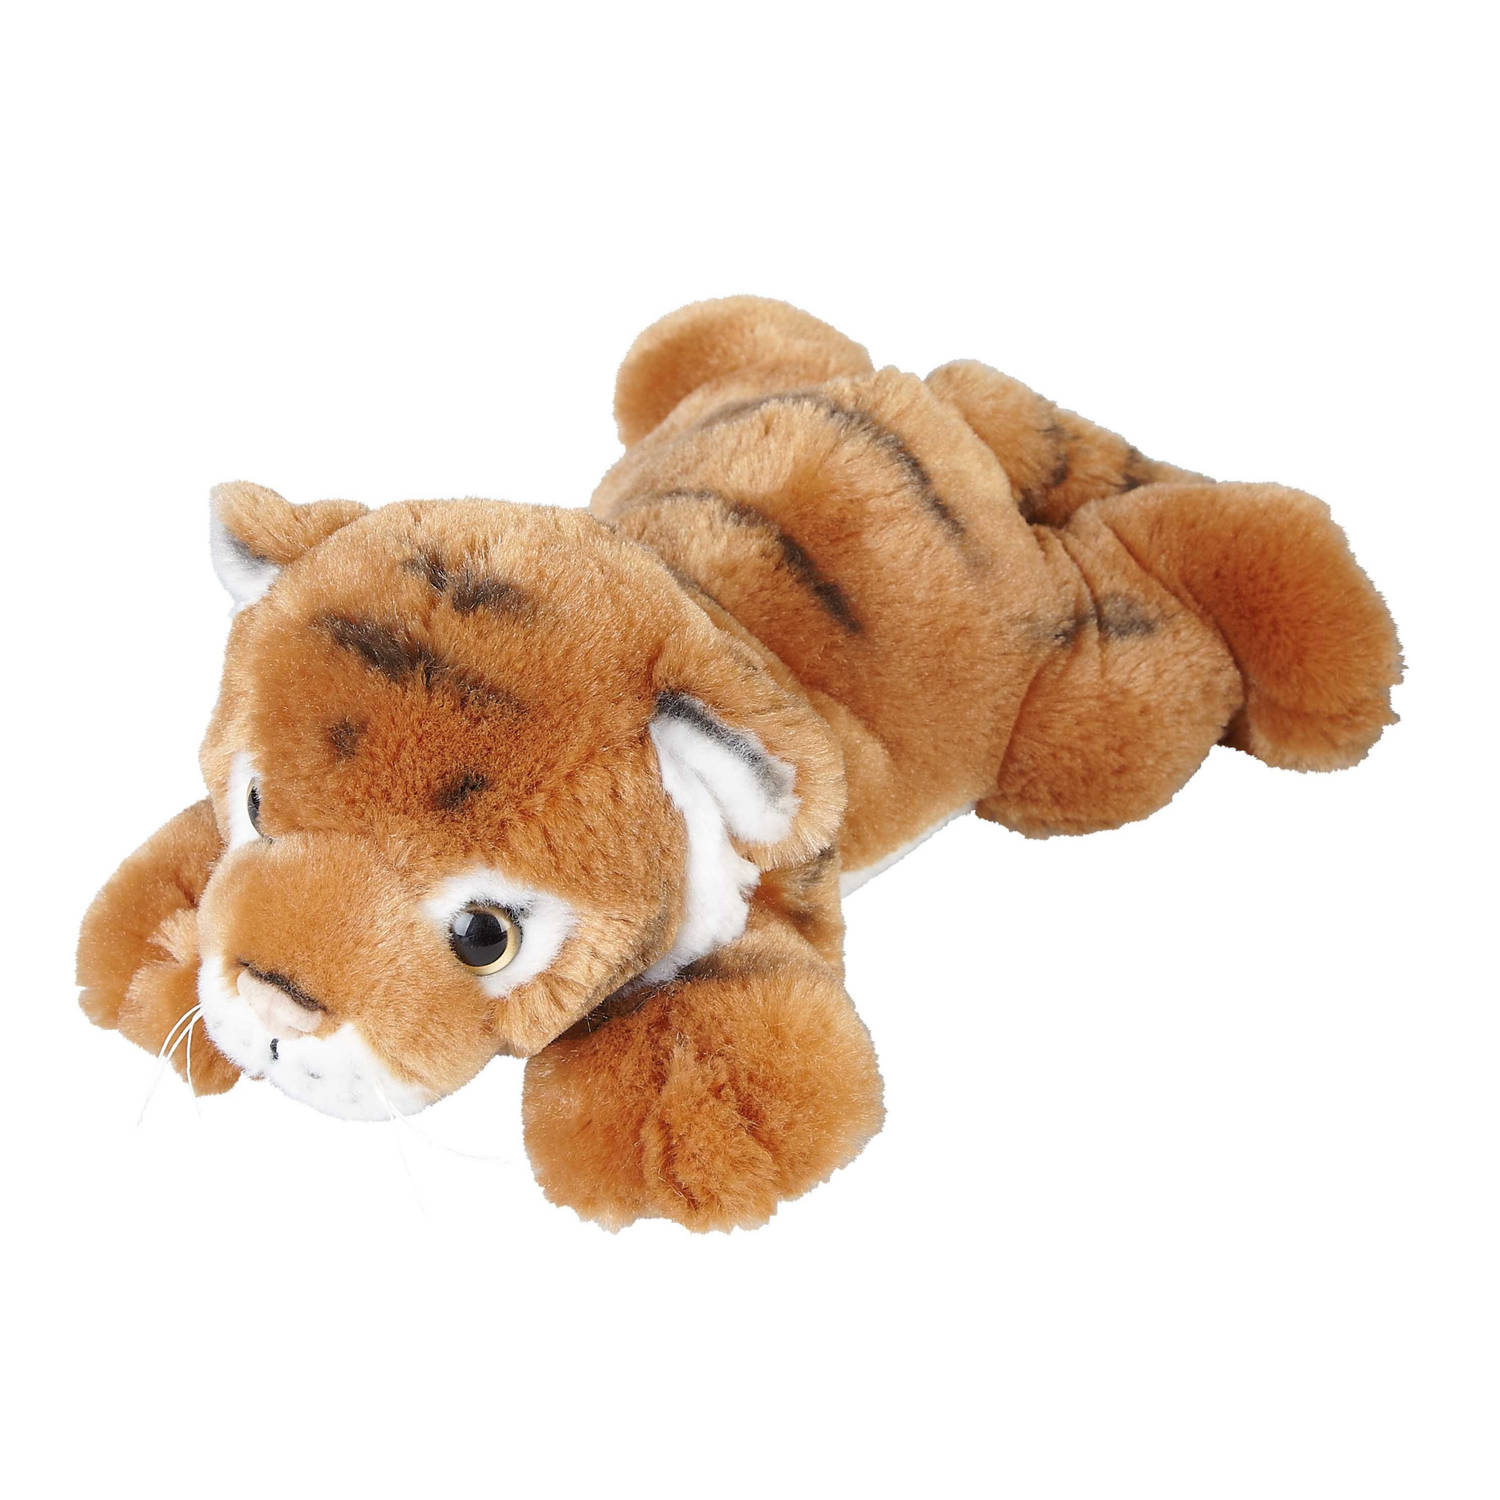 Pluche knuffel dieren bruine Tijger 25 cm - Speelgoed wilde dieren knuffelbeesten